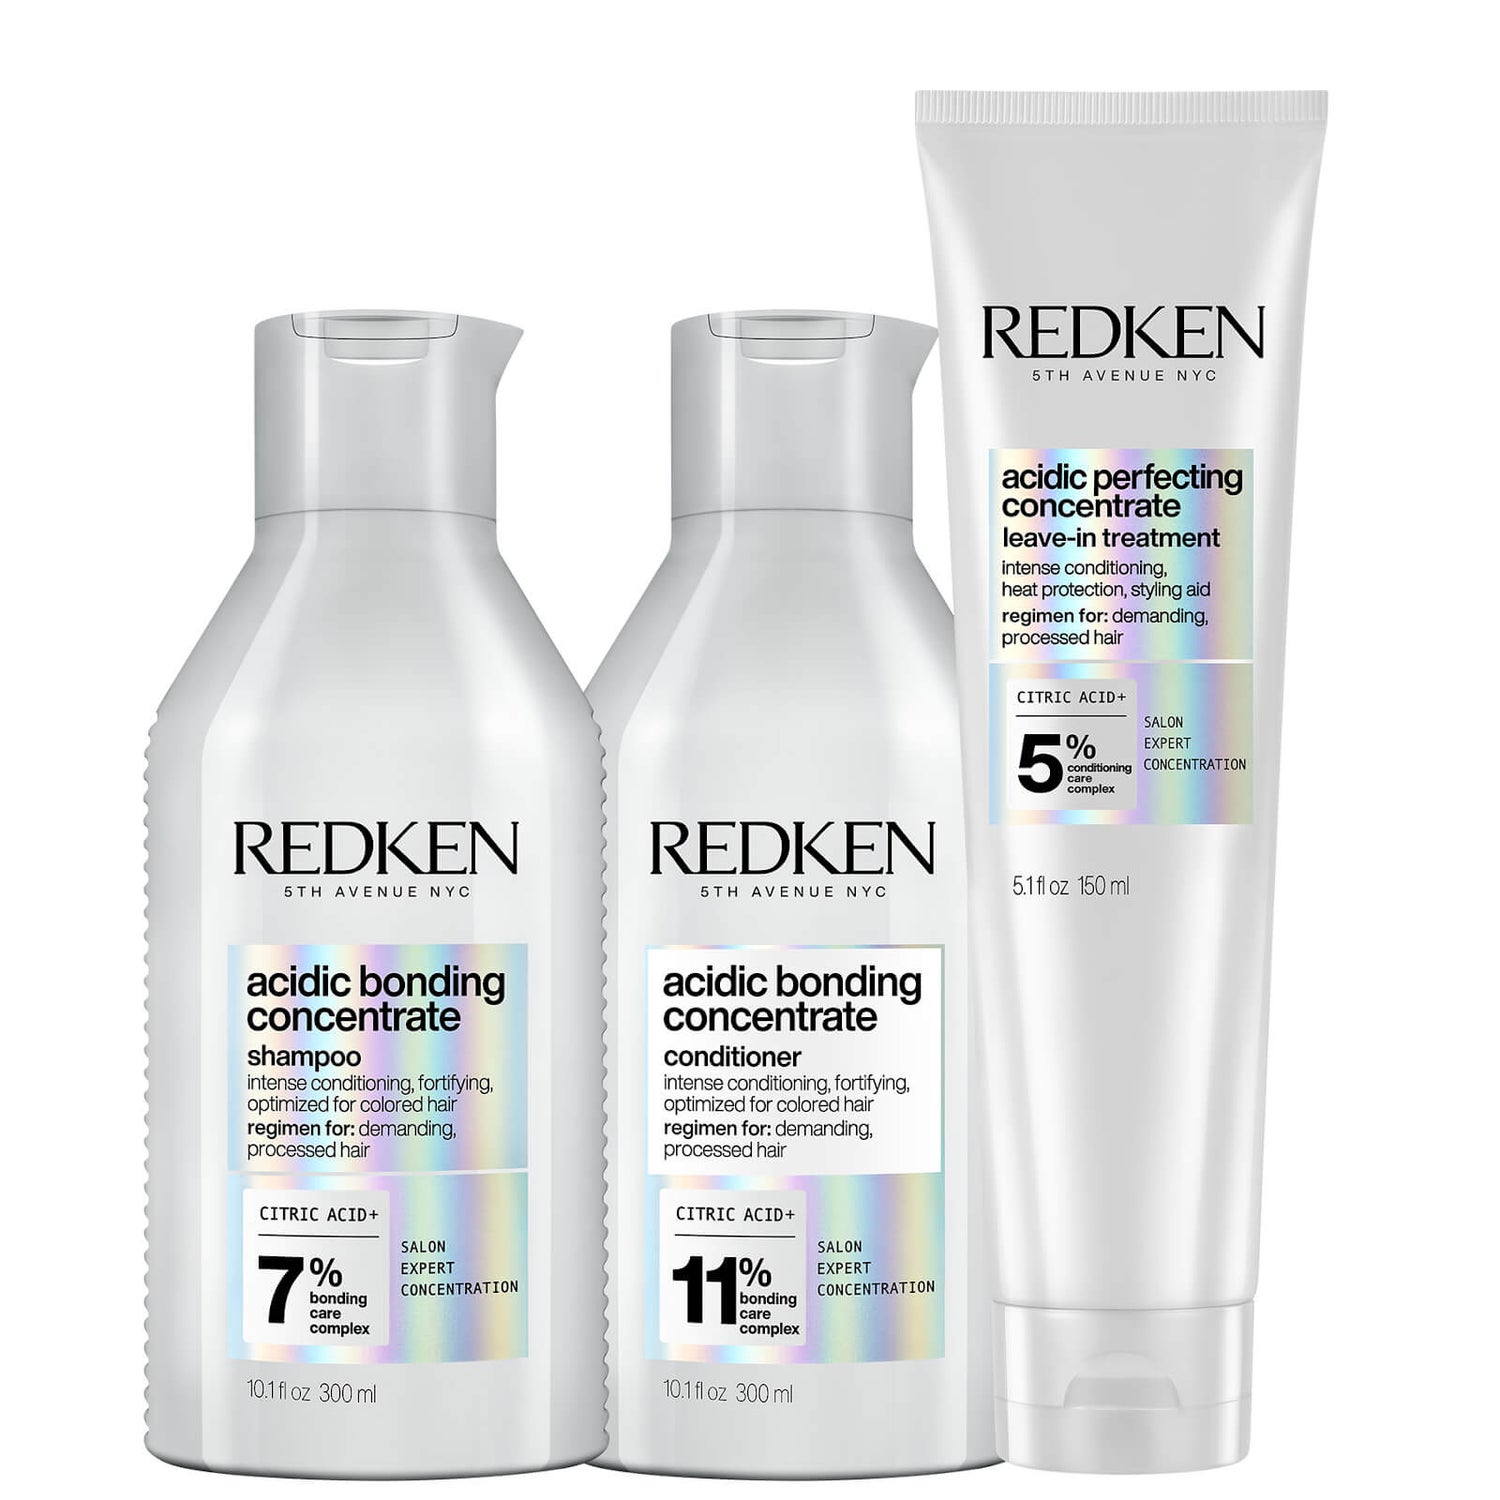 Redken Acidic Bonding Concentrate Leave-in Treatment Set